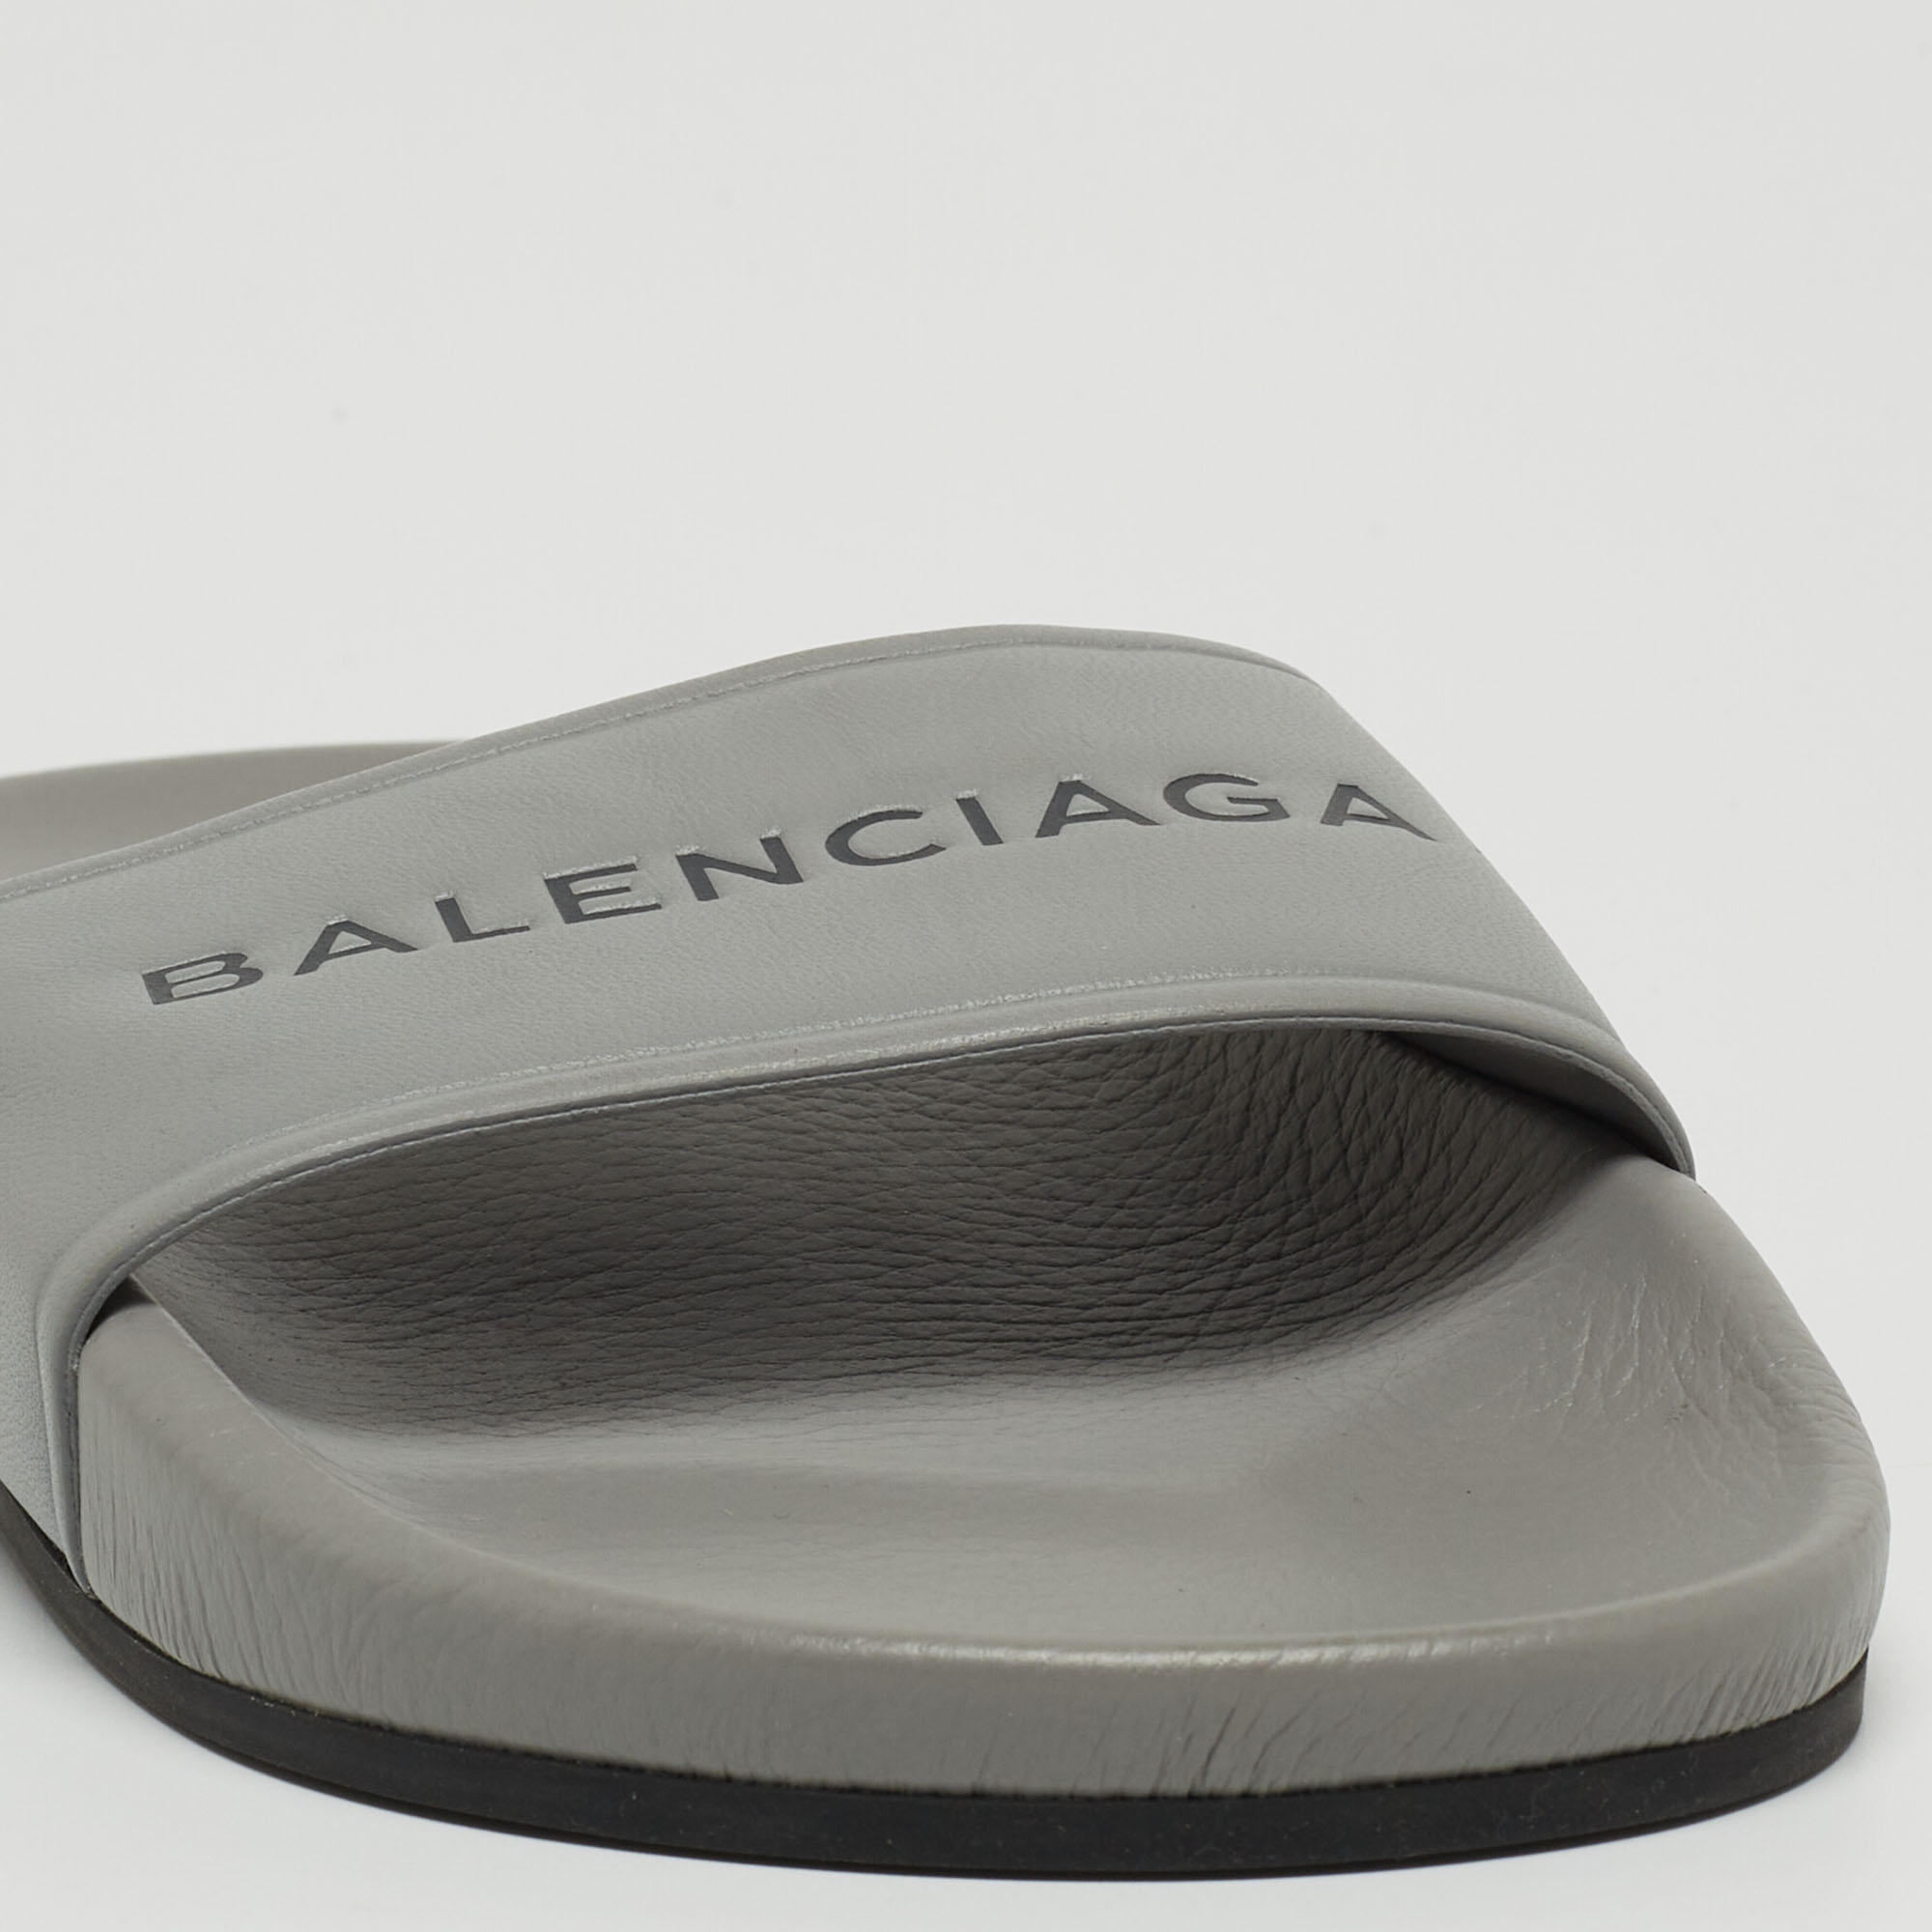 Balenciaga Grey Leather Logo Pool Slides Size 36